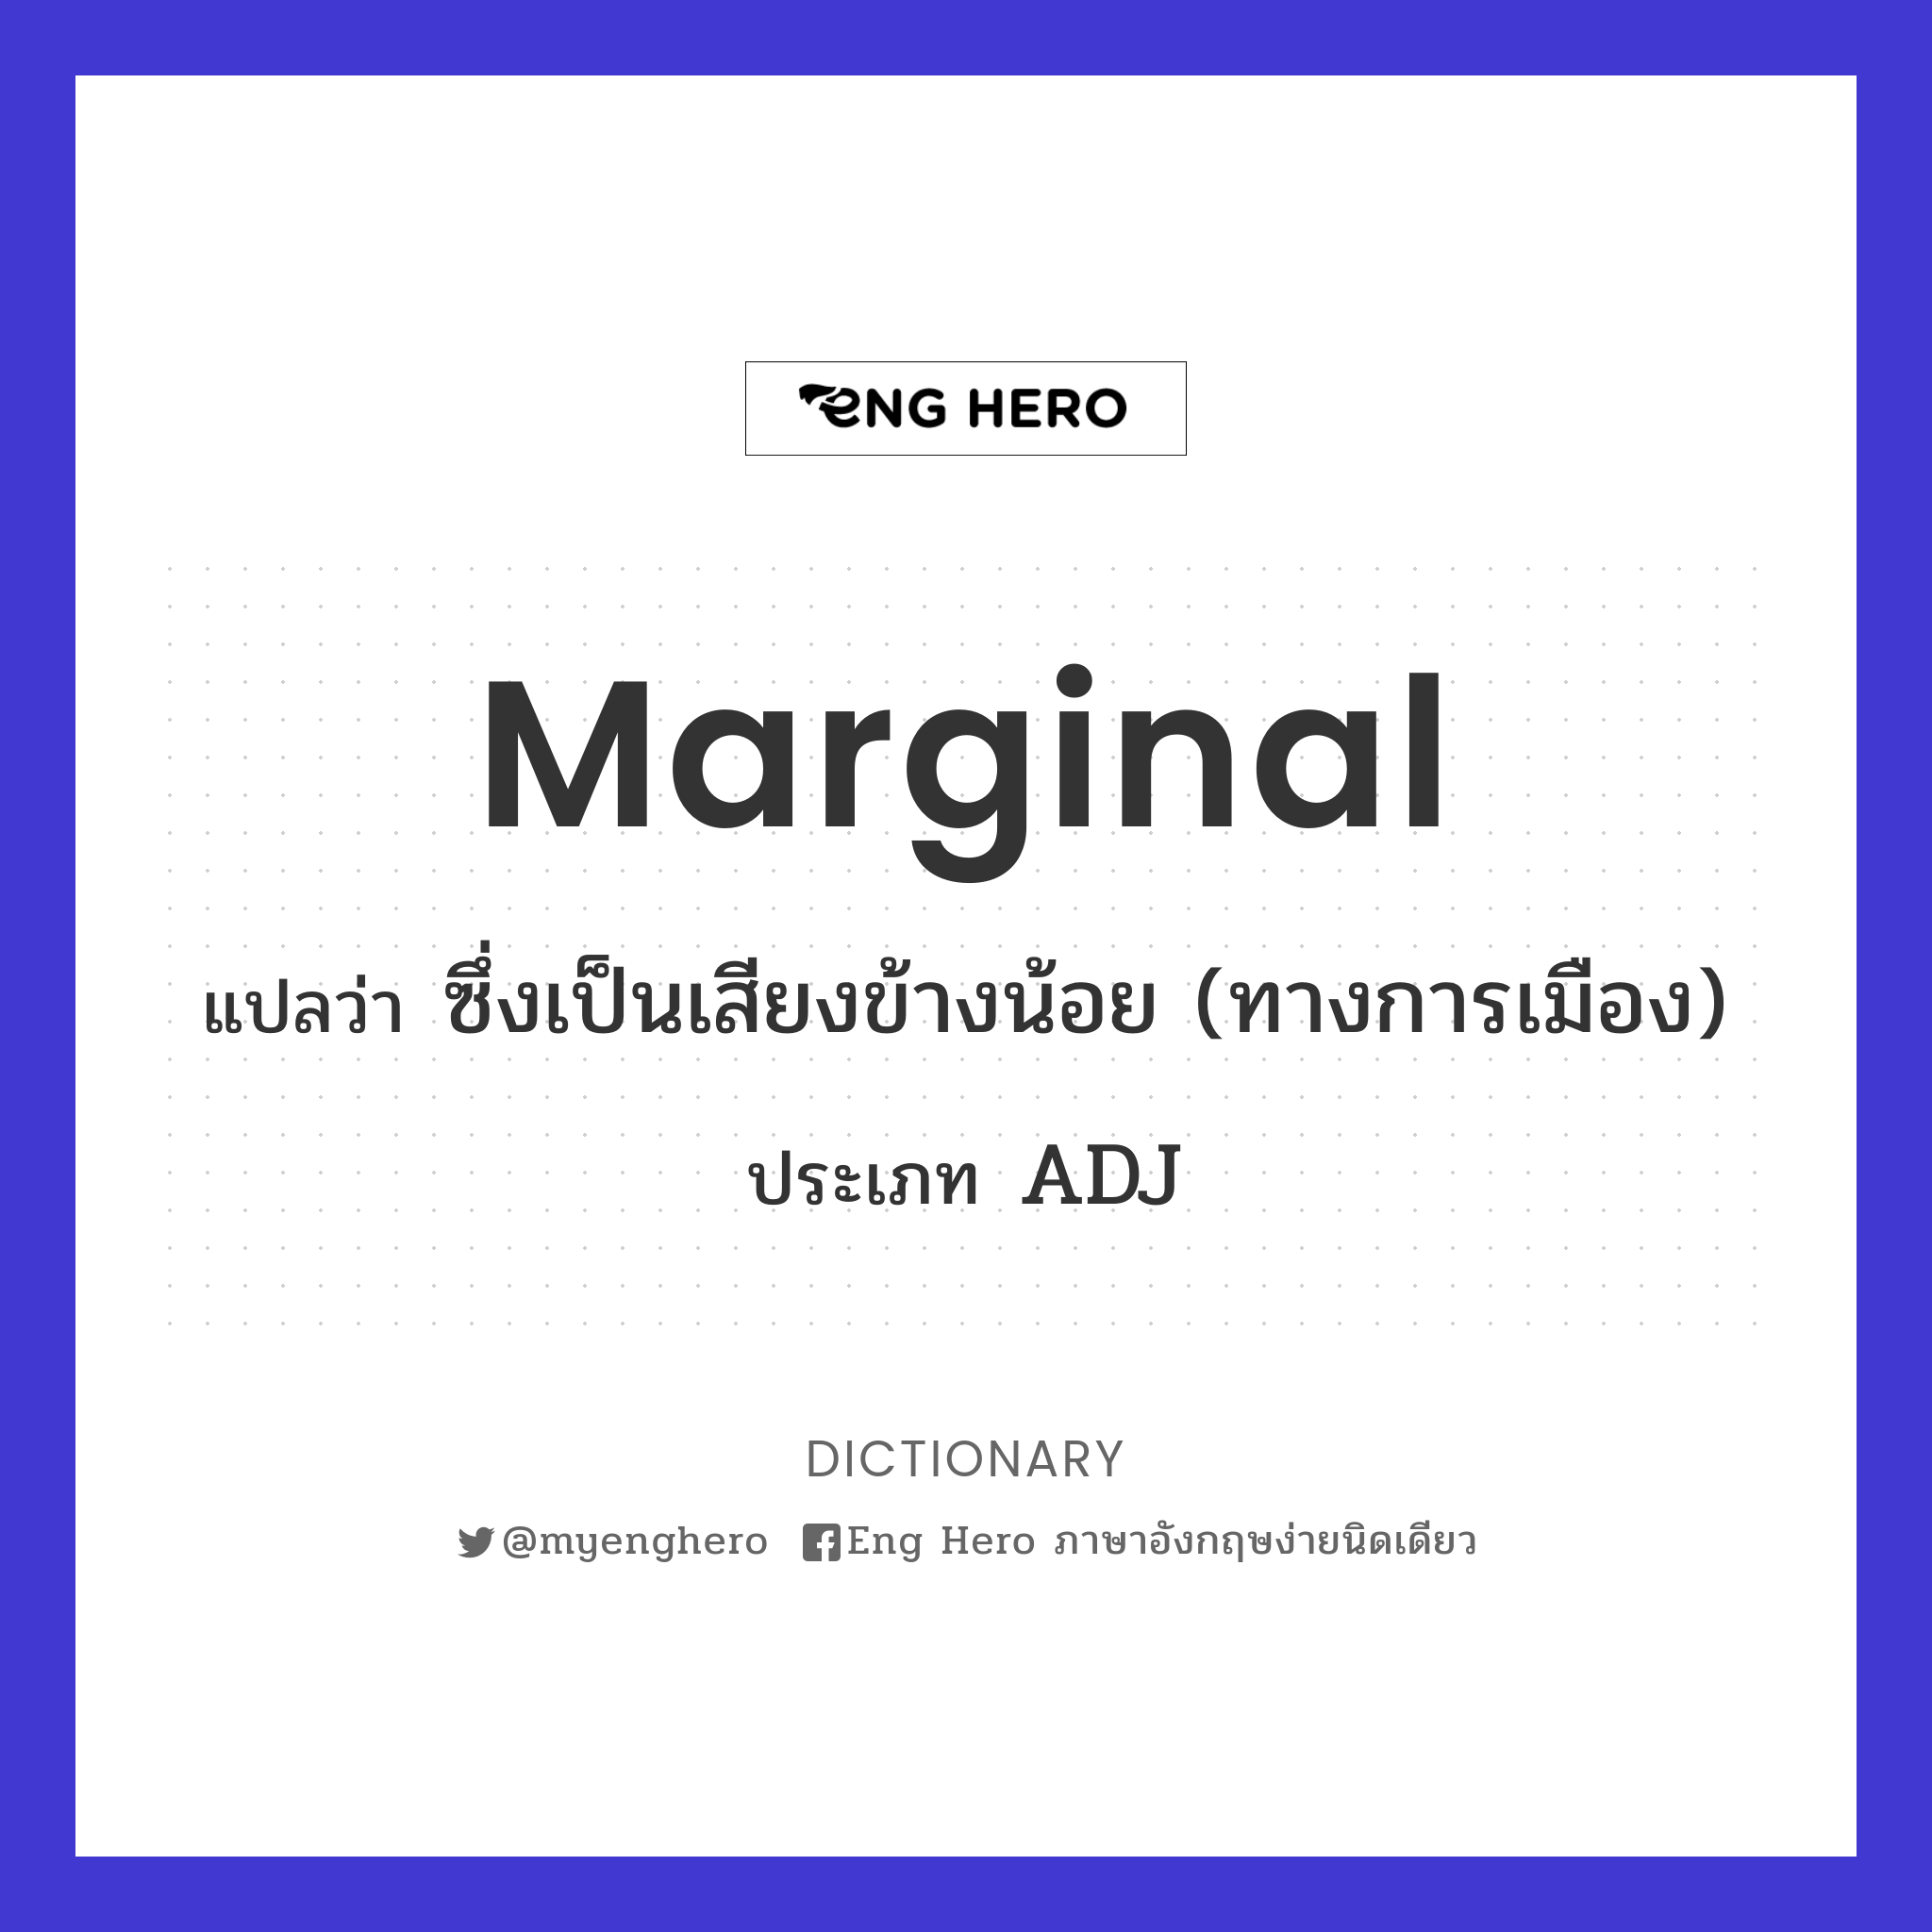 marginal